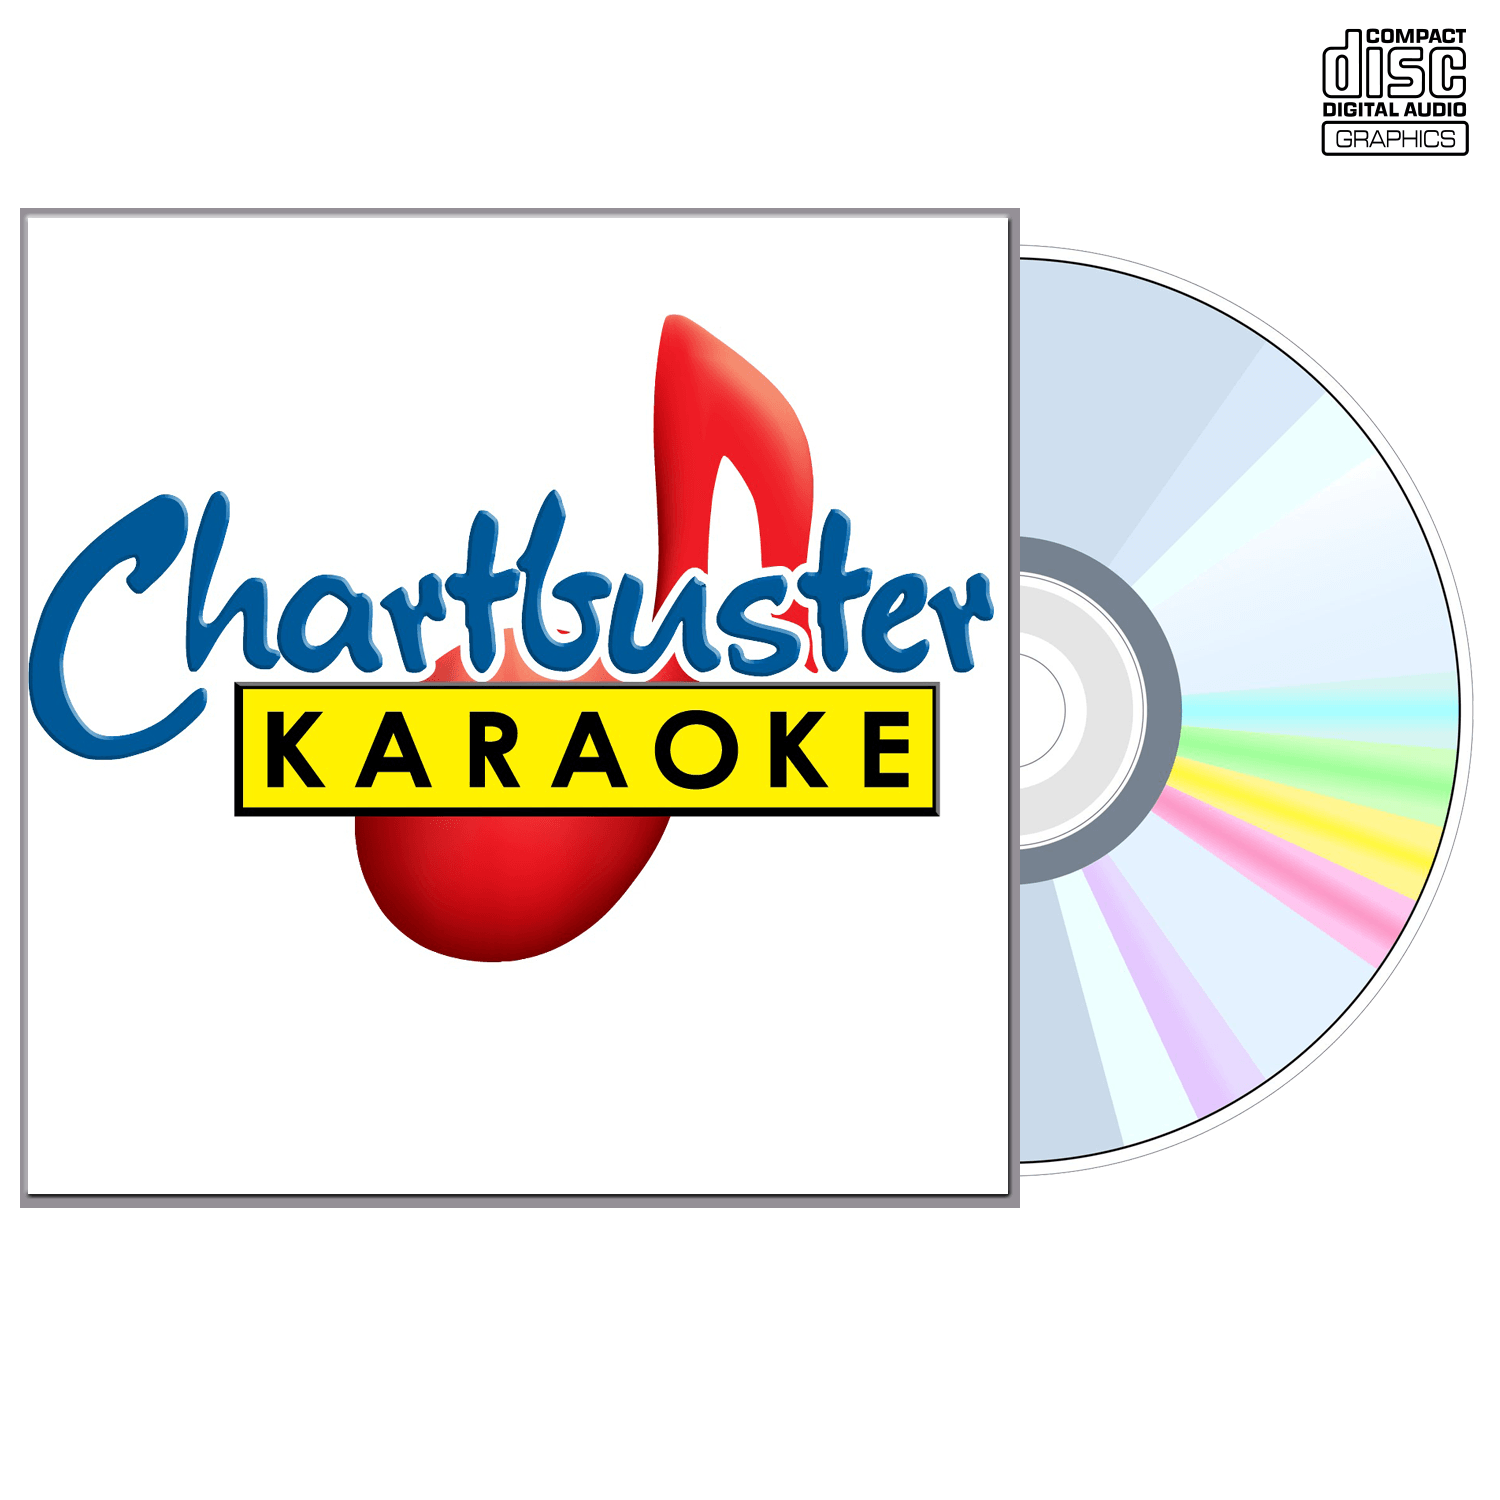 The Kinleys - CD+G - Chartbuster Karaoke - Karaoke Home Entertainment